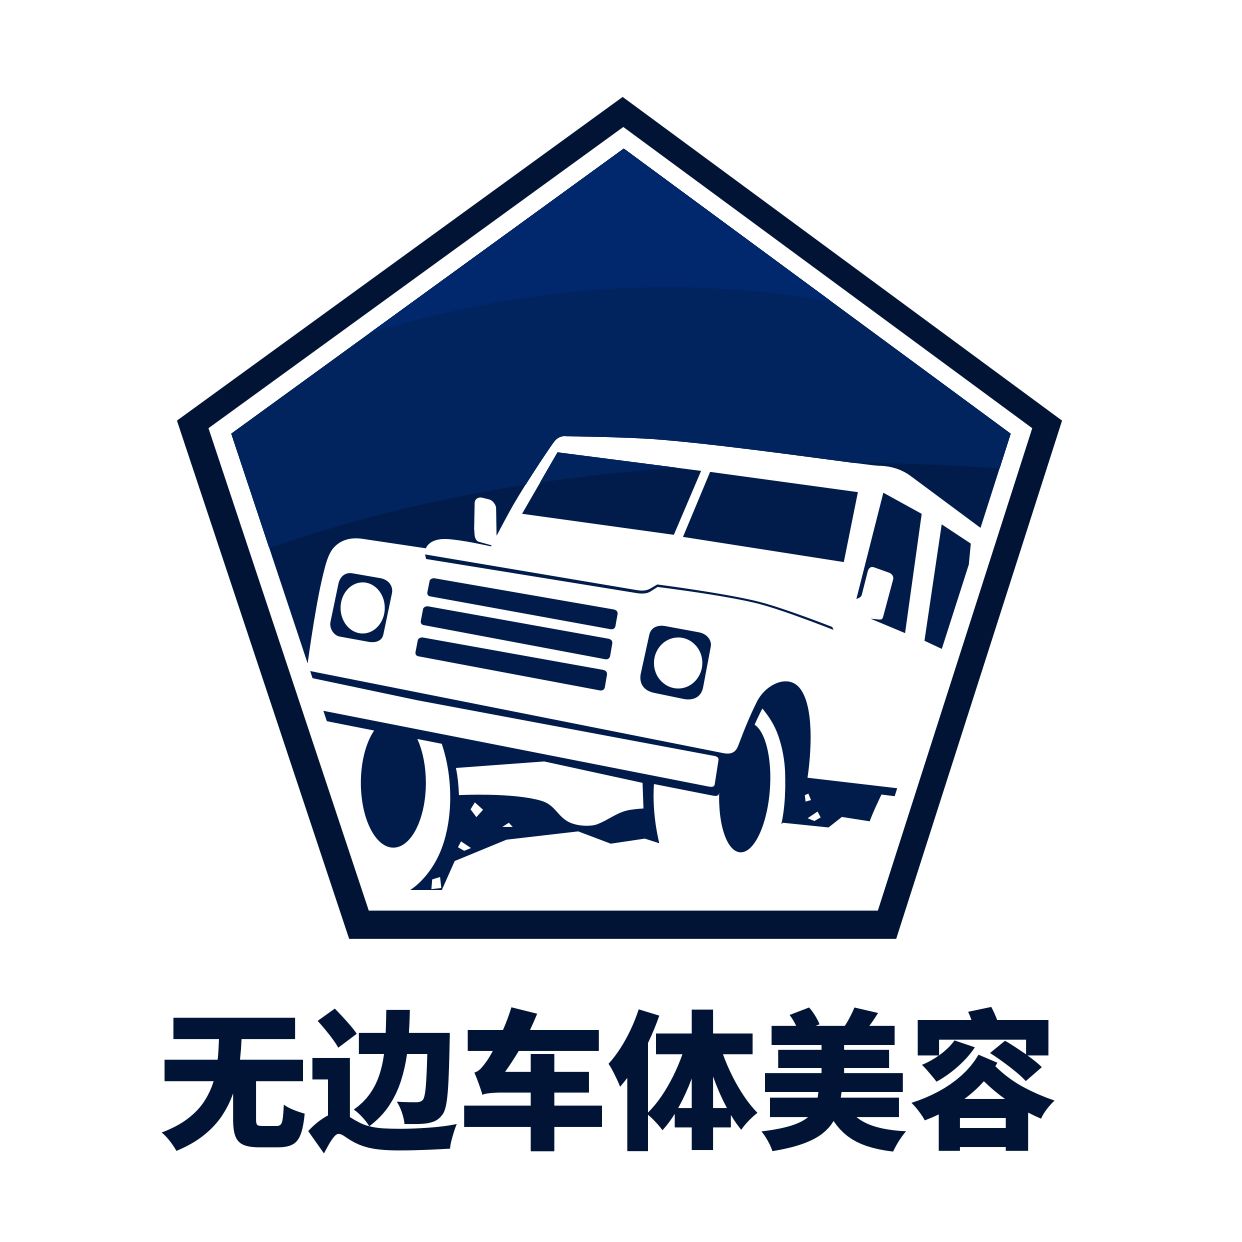 汽车五边形越野logo